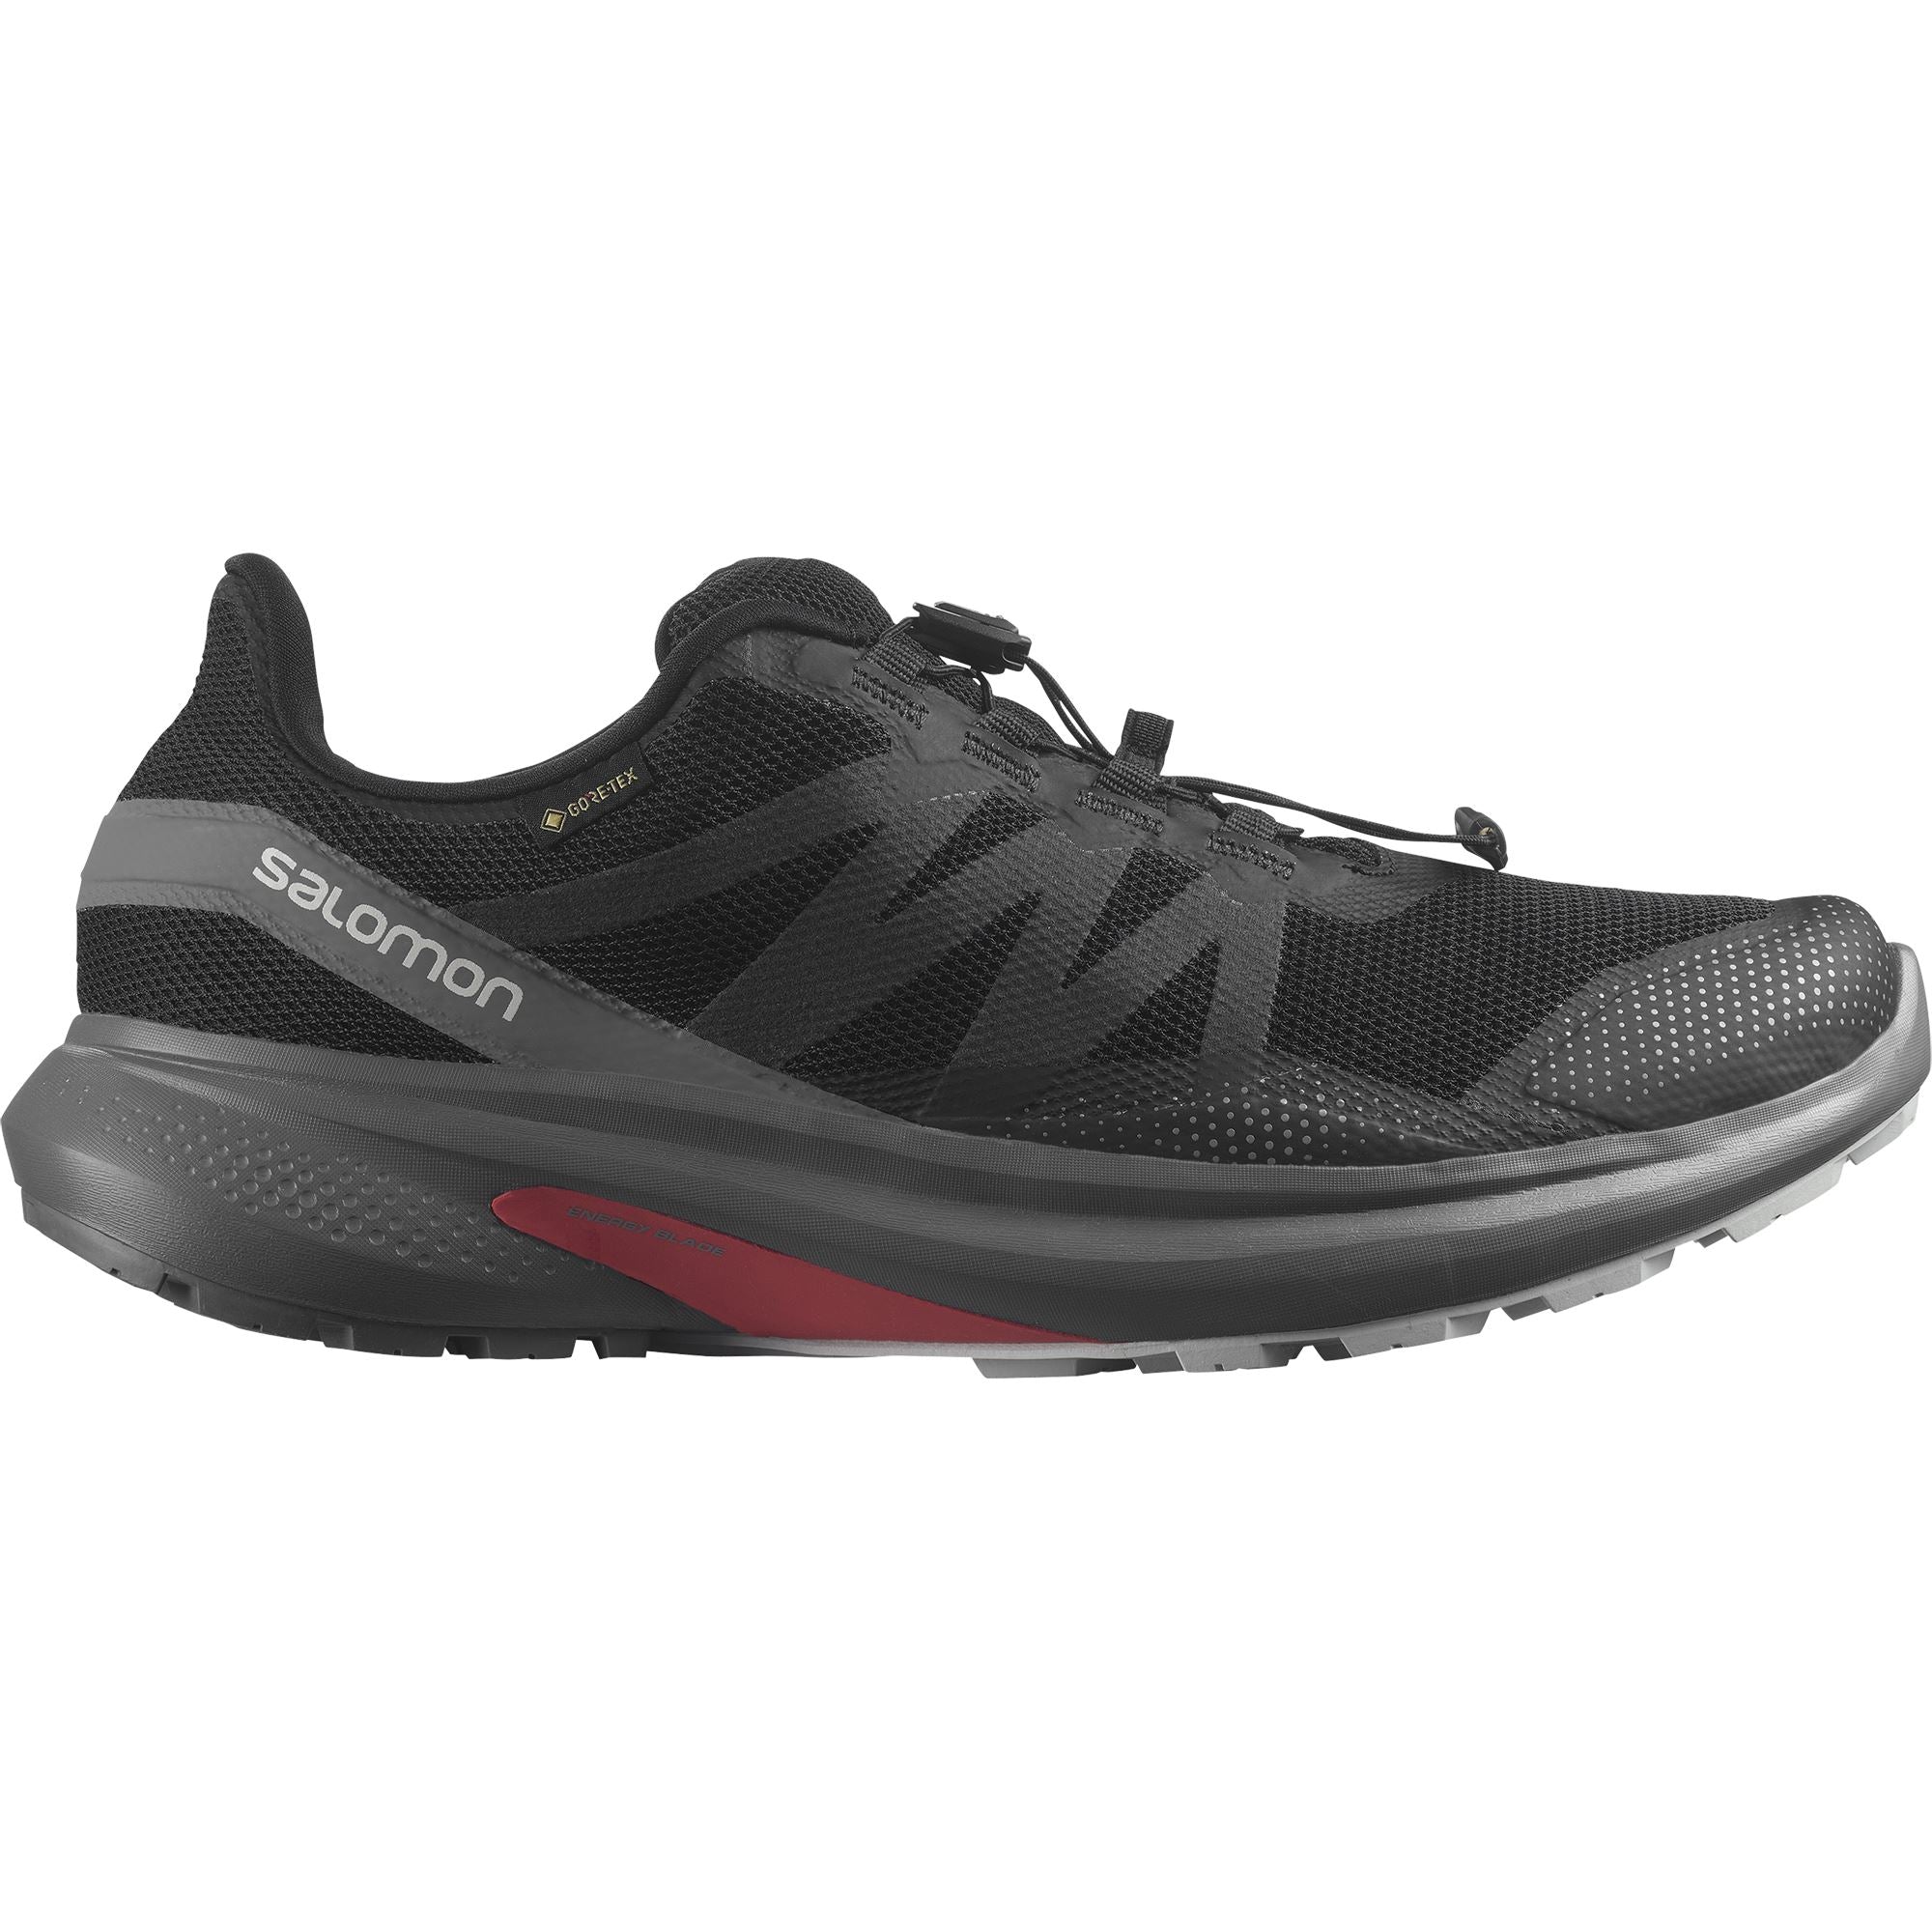 Salomon Hypulse GTX Men's Trail Running Shoes Black / Quiet Shade / Lunar Rock US 8.5 